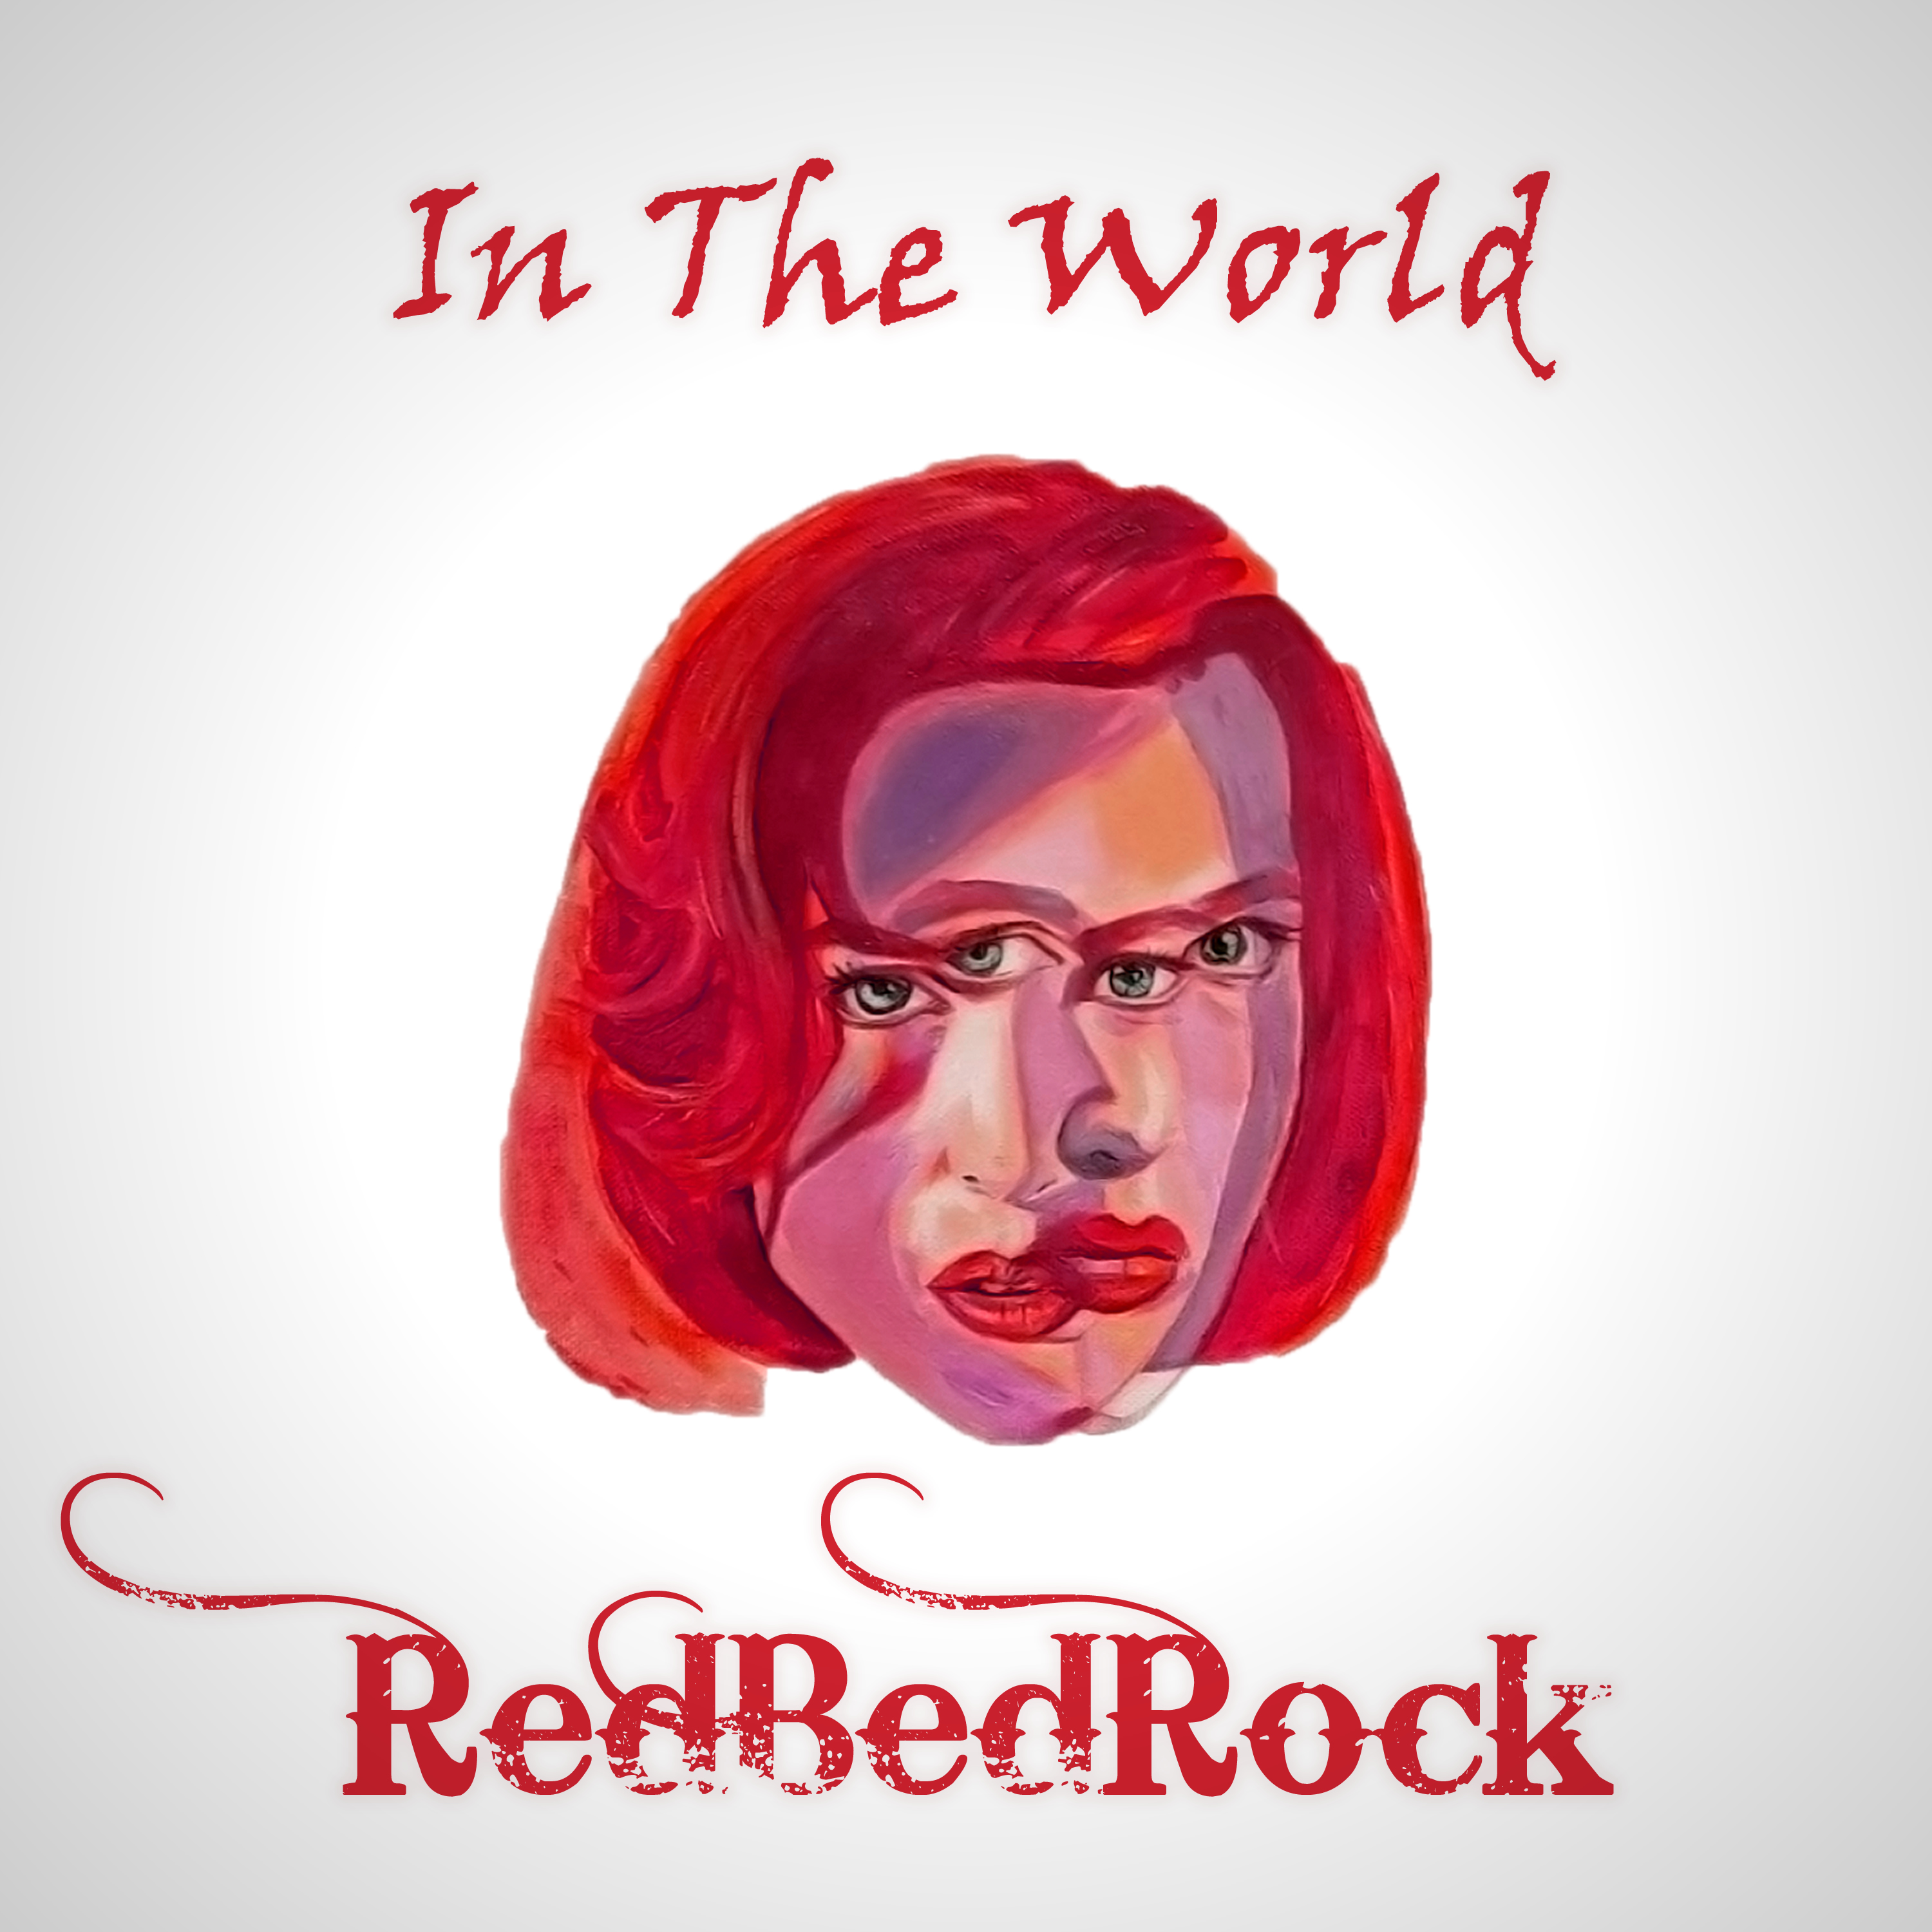 RedBedRock - In The World